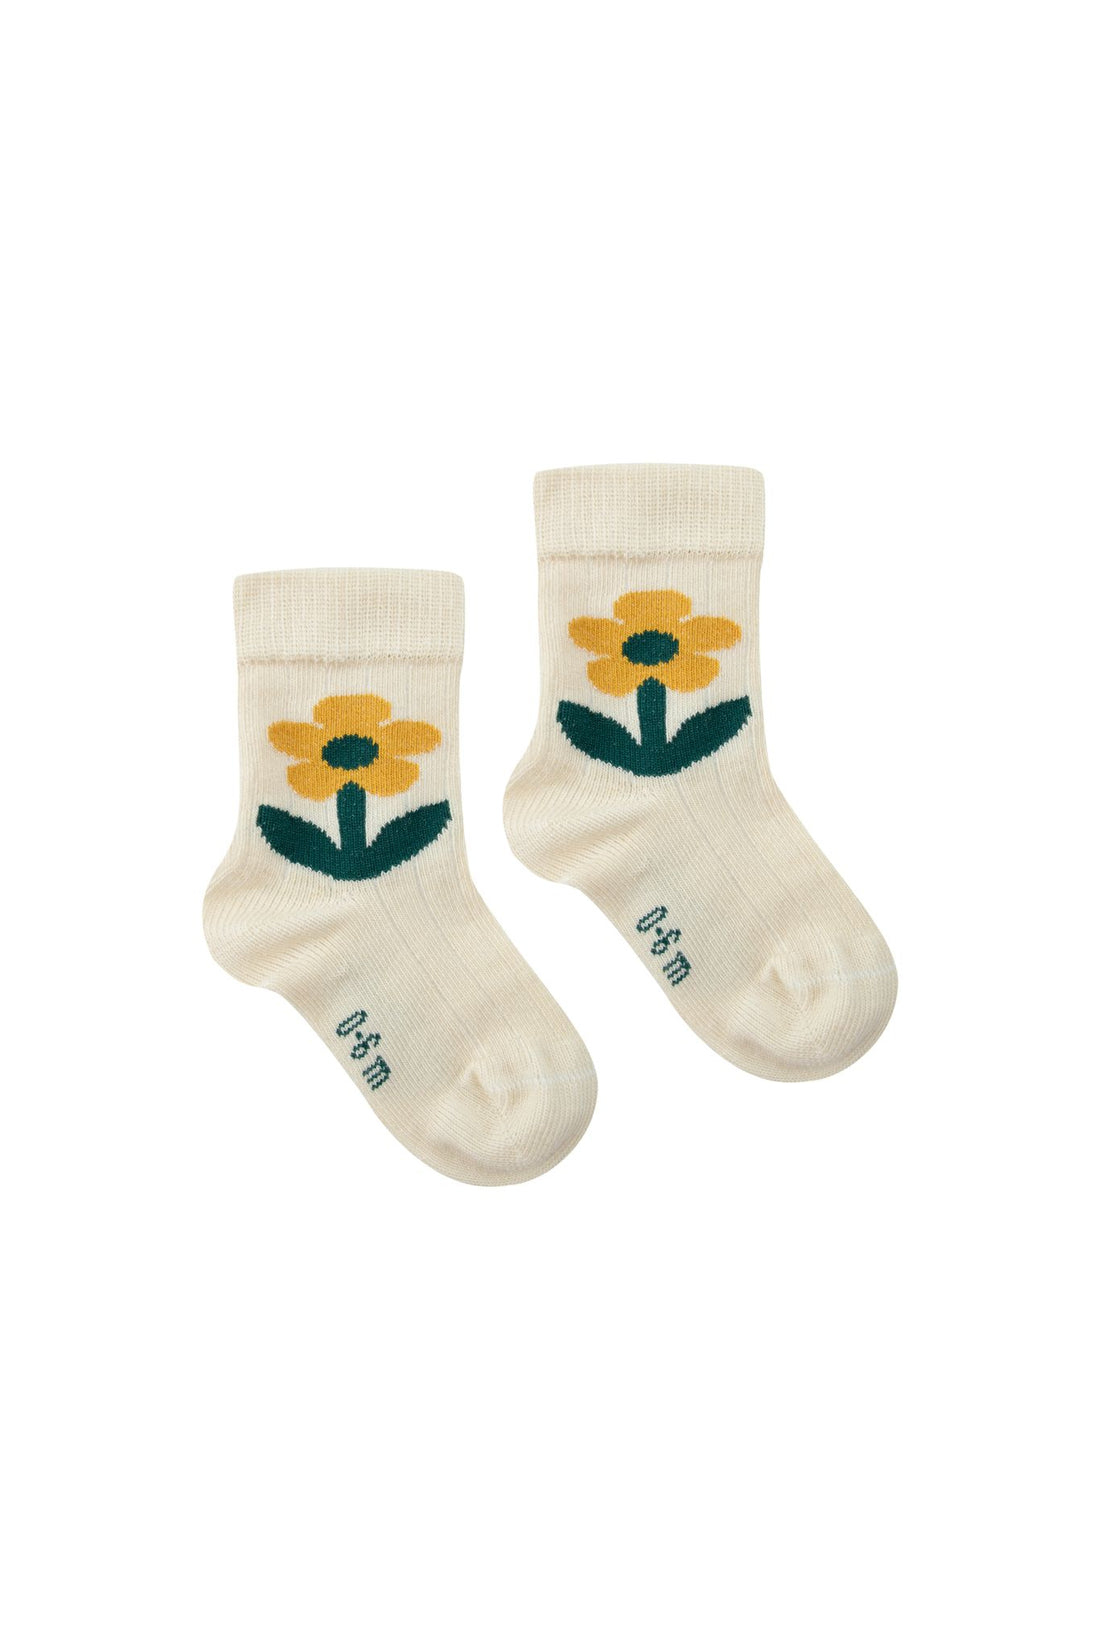 Tiny Cottons - flower socks - light cream